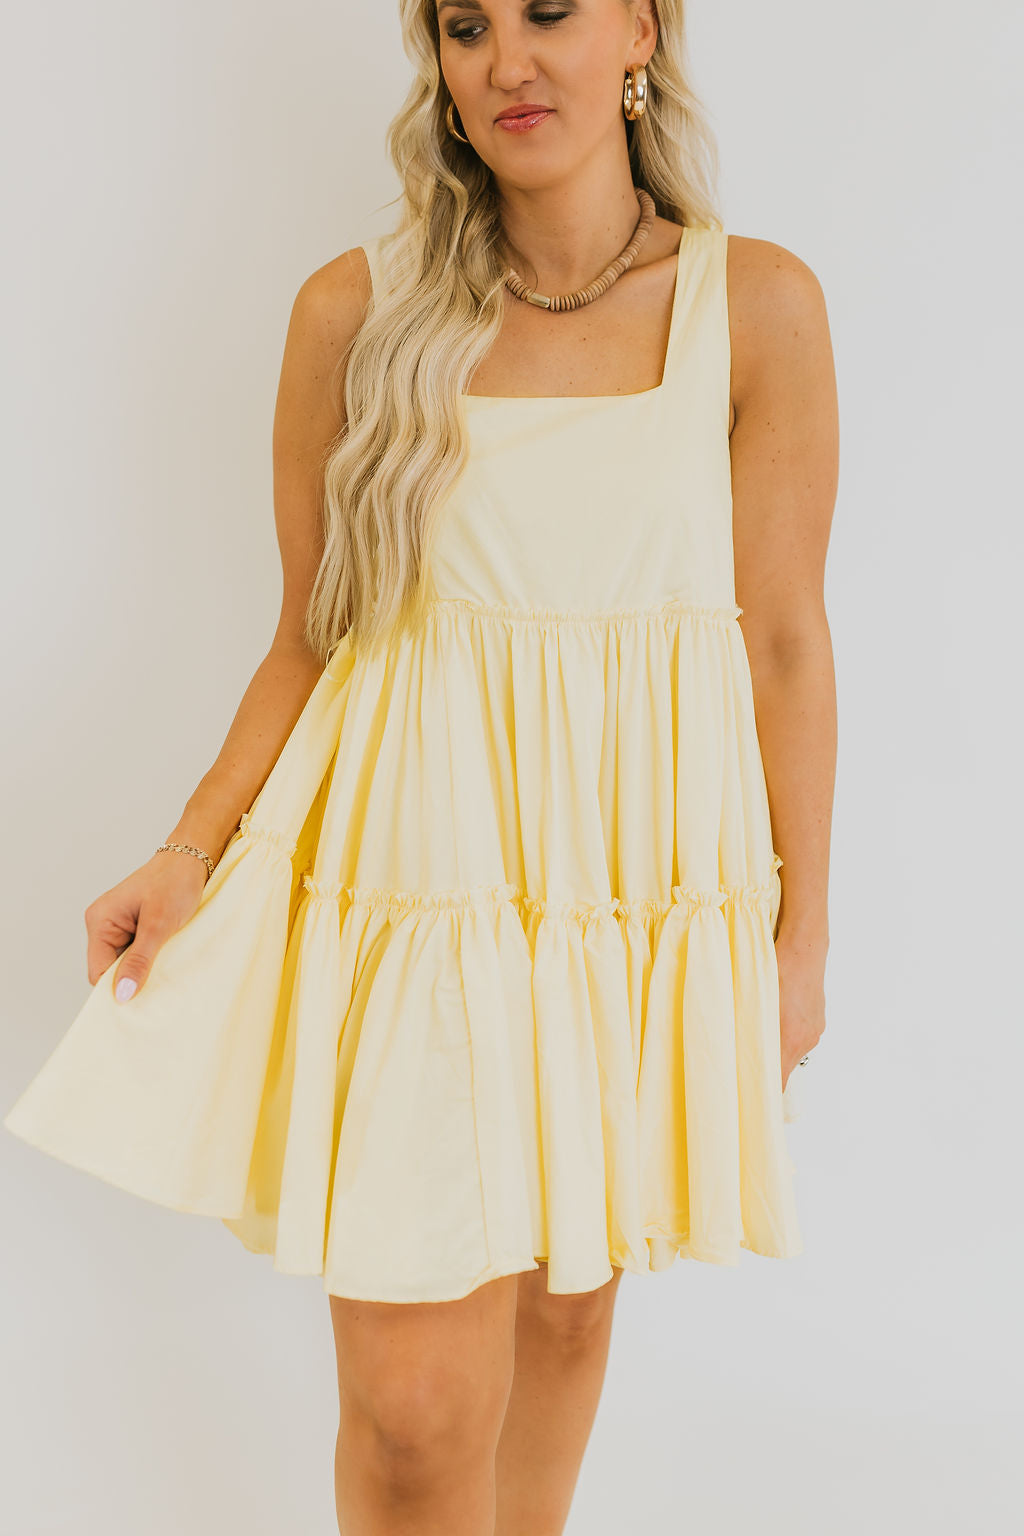 Southern Belle Dress - Sunshine